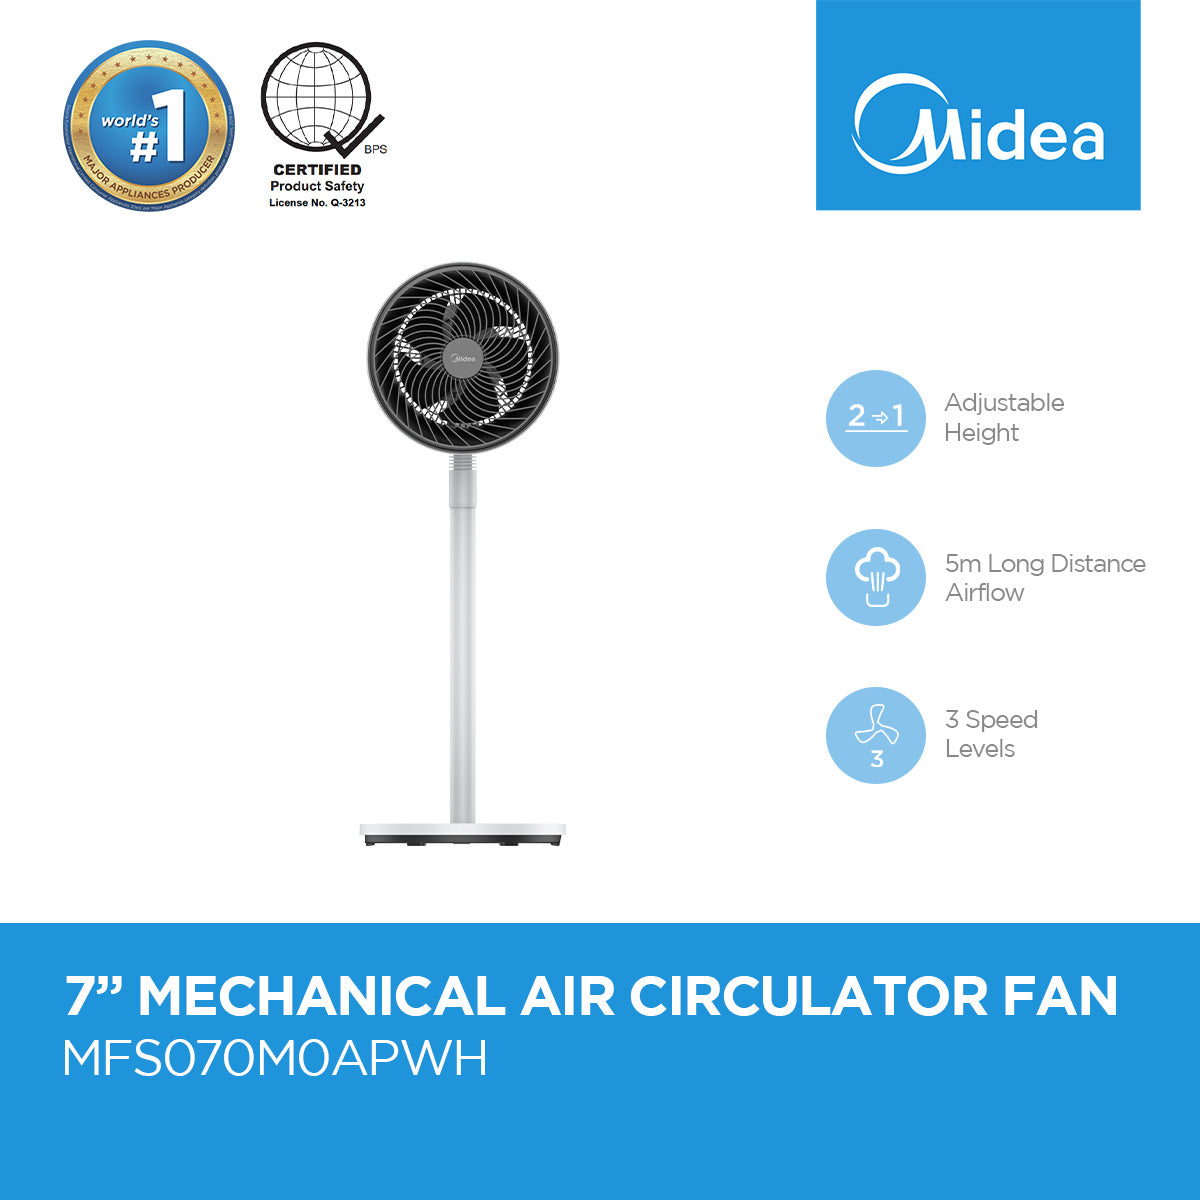 MIDEA 7" Mechanical Air Circulator Fan